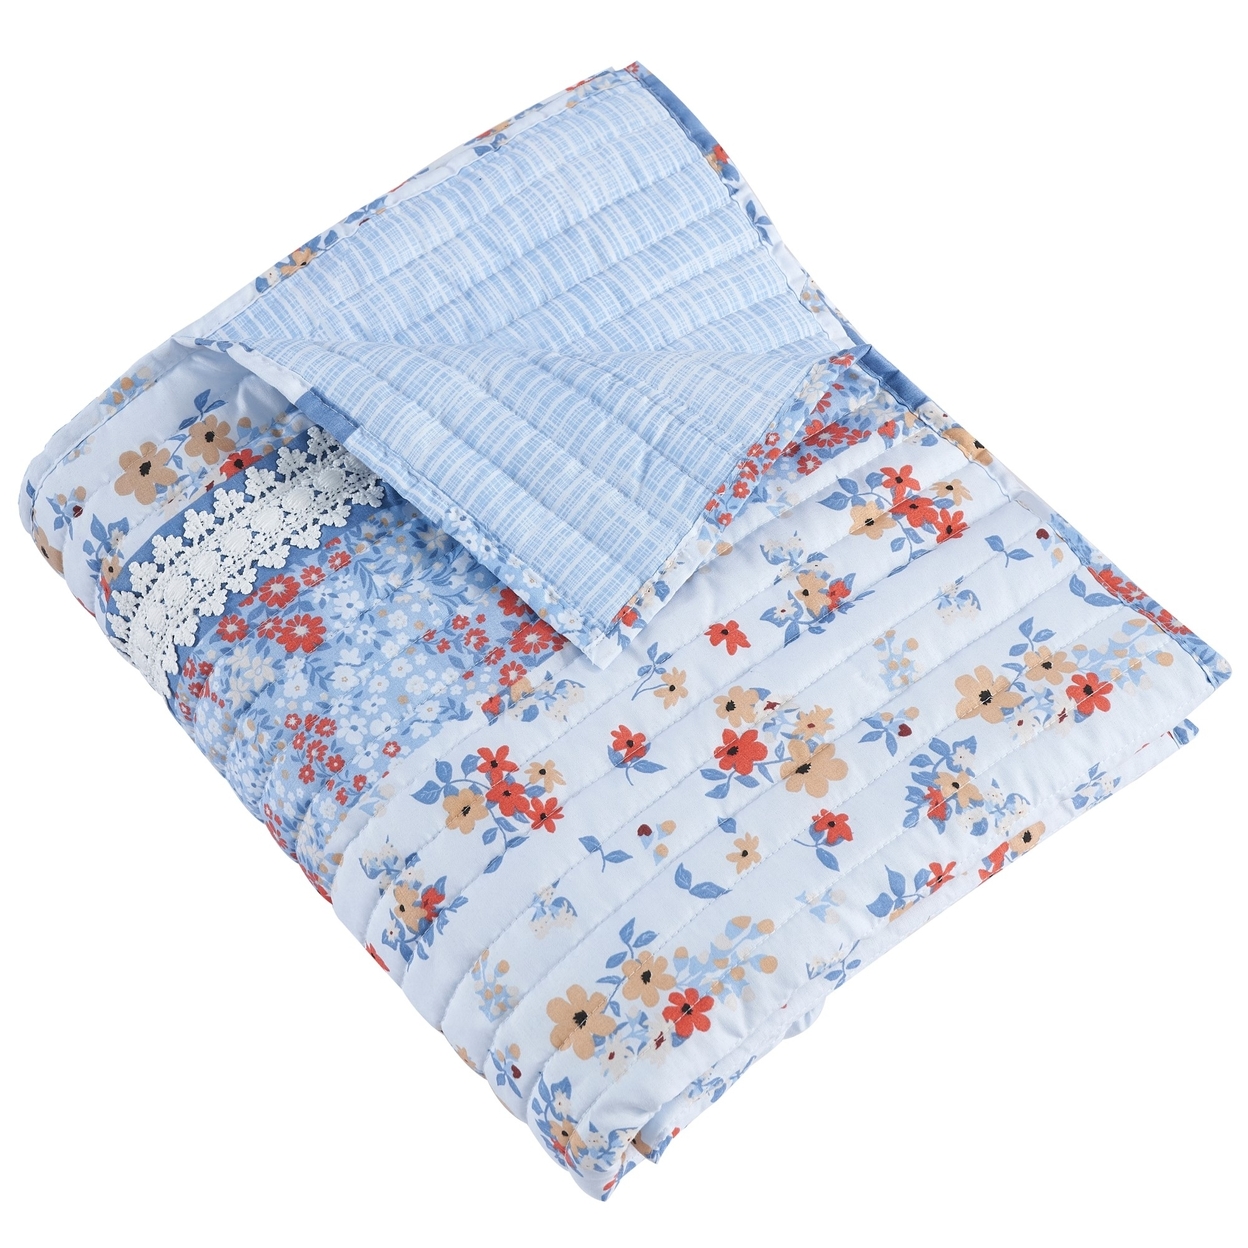 Joa 60 Inch Throw Blanket, Light Blue Microfiber Fabric, Pink Flowers- Saltoro Sherpi